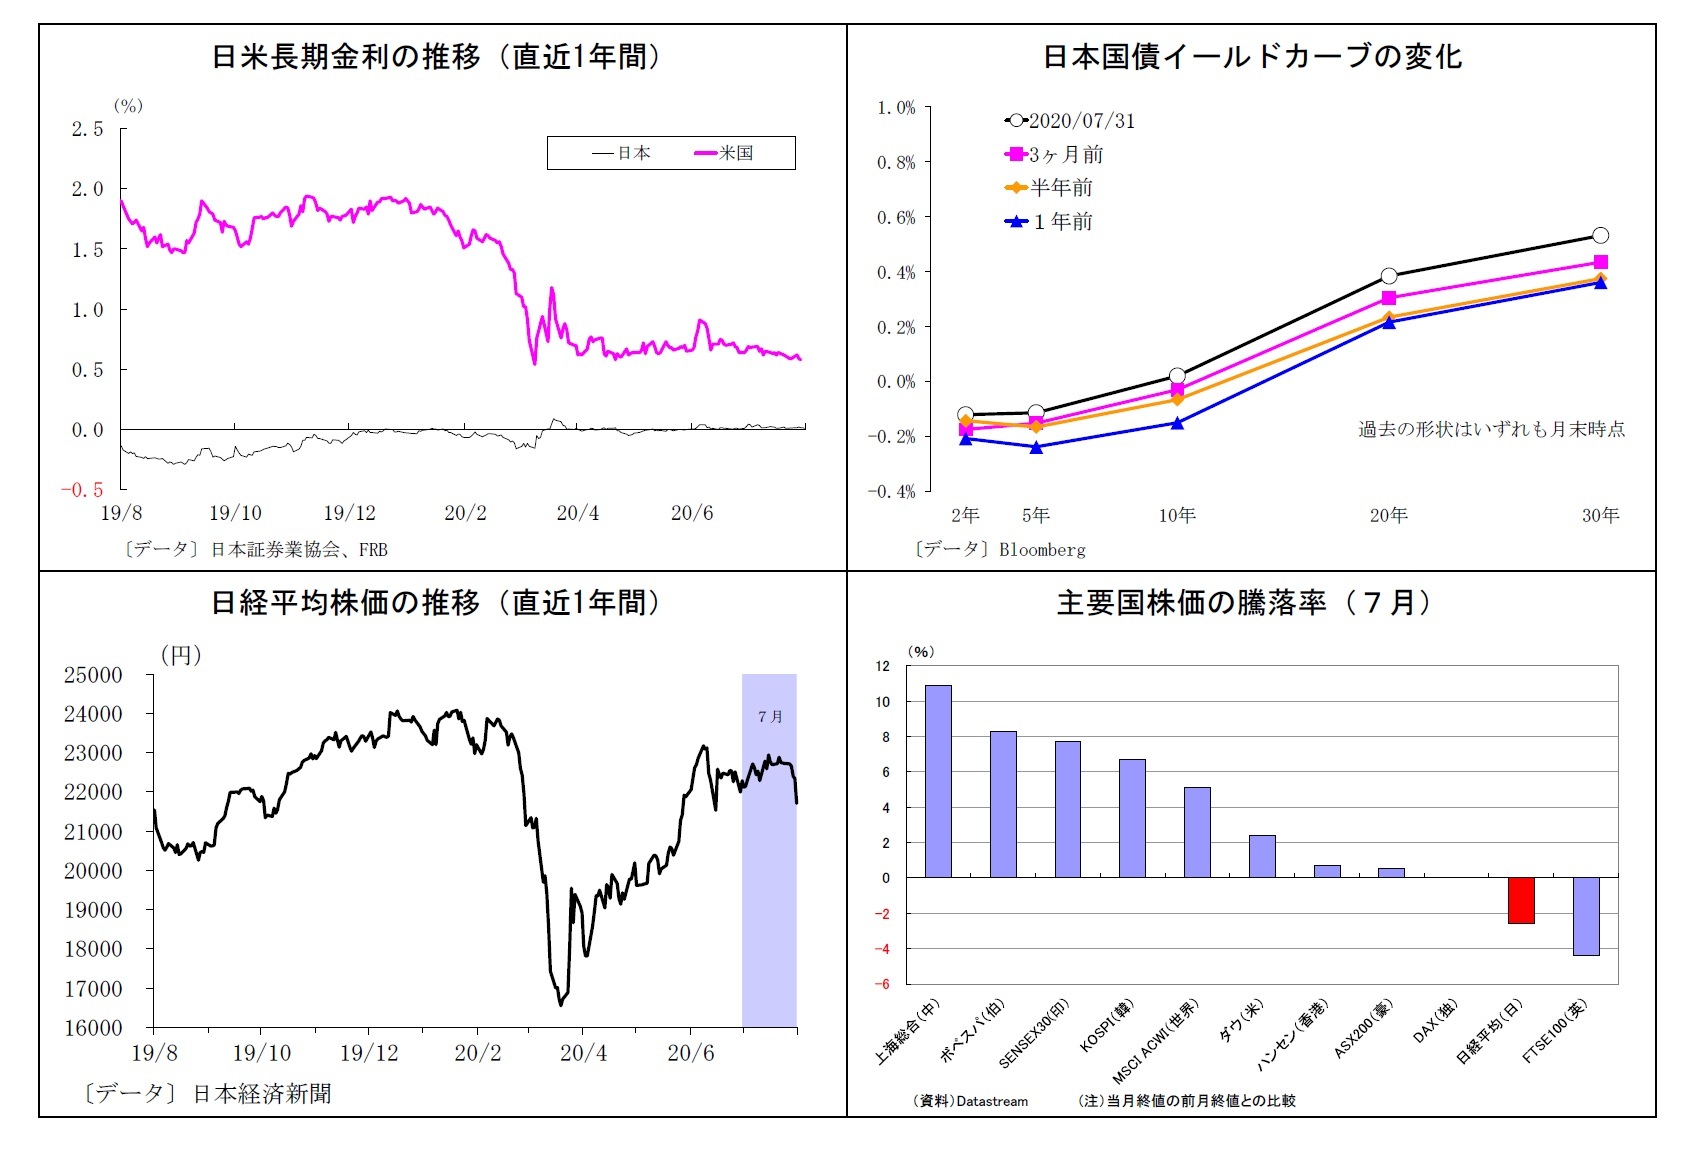 日米長期金利の推移（直近1年間）/日本国債イールドカーブの変化/日経平均株価の推移（直近1年間）/主要国株価の騰落率（７月）